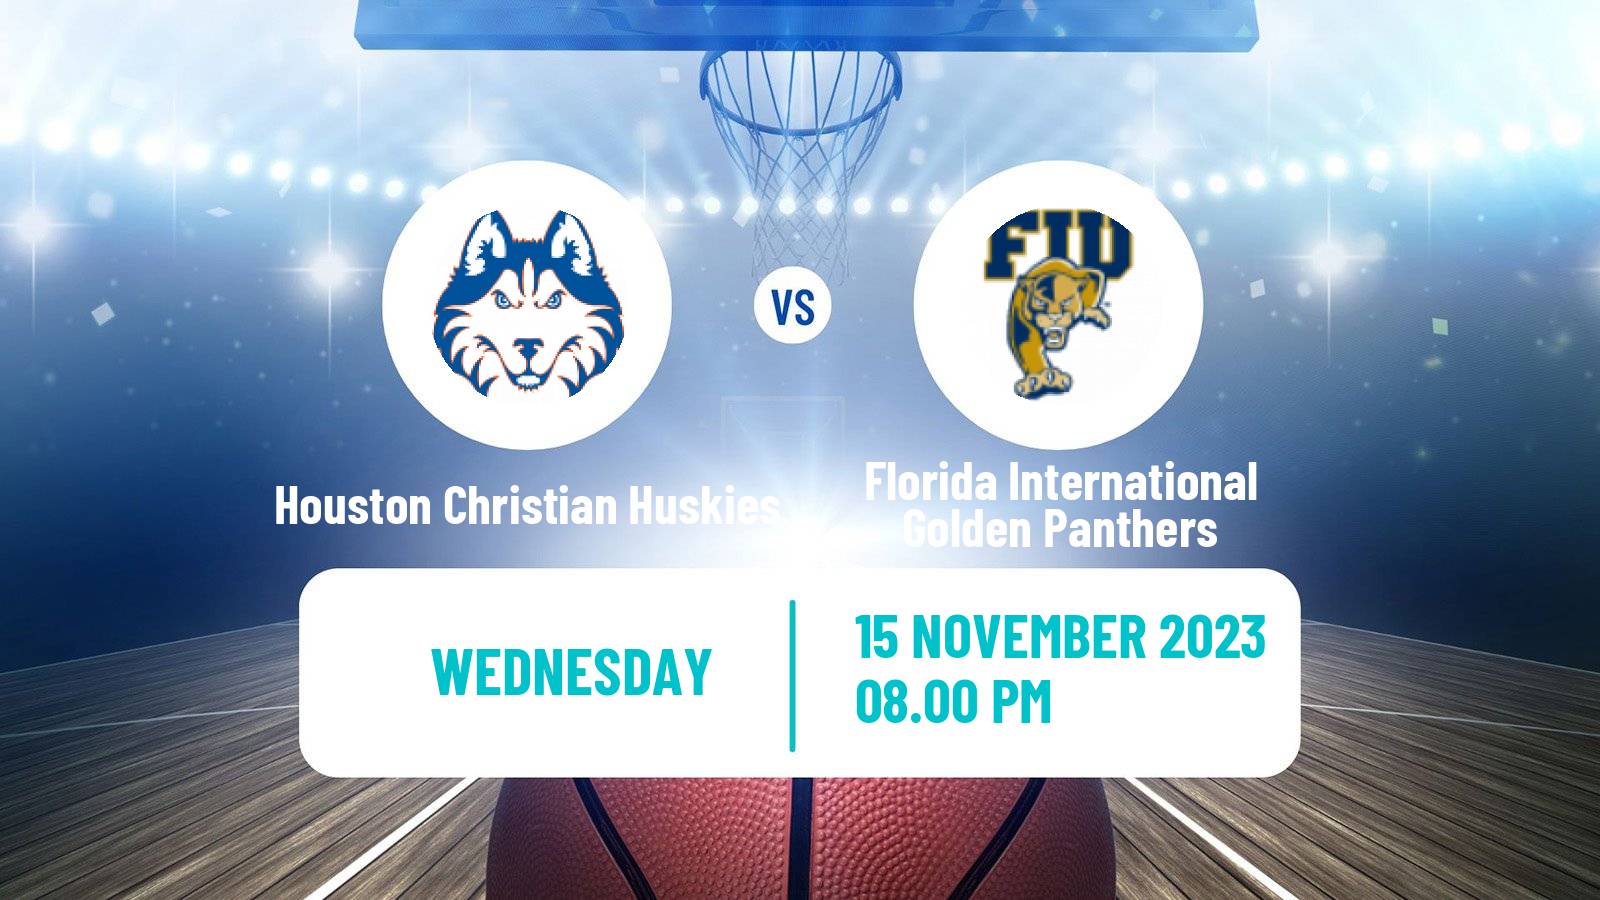 Basketball NCAA College Basketball Houston Christian Huskies - Florida International Golden Panthers